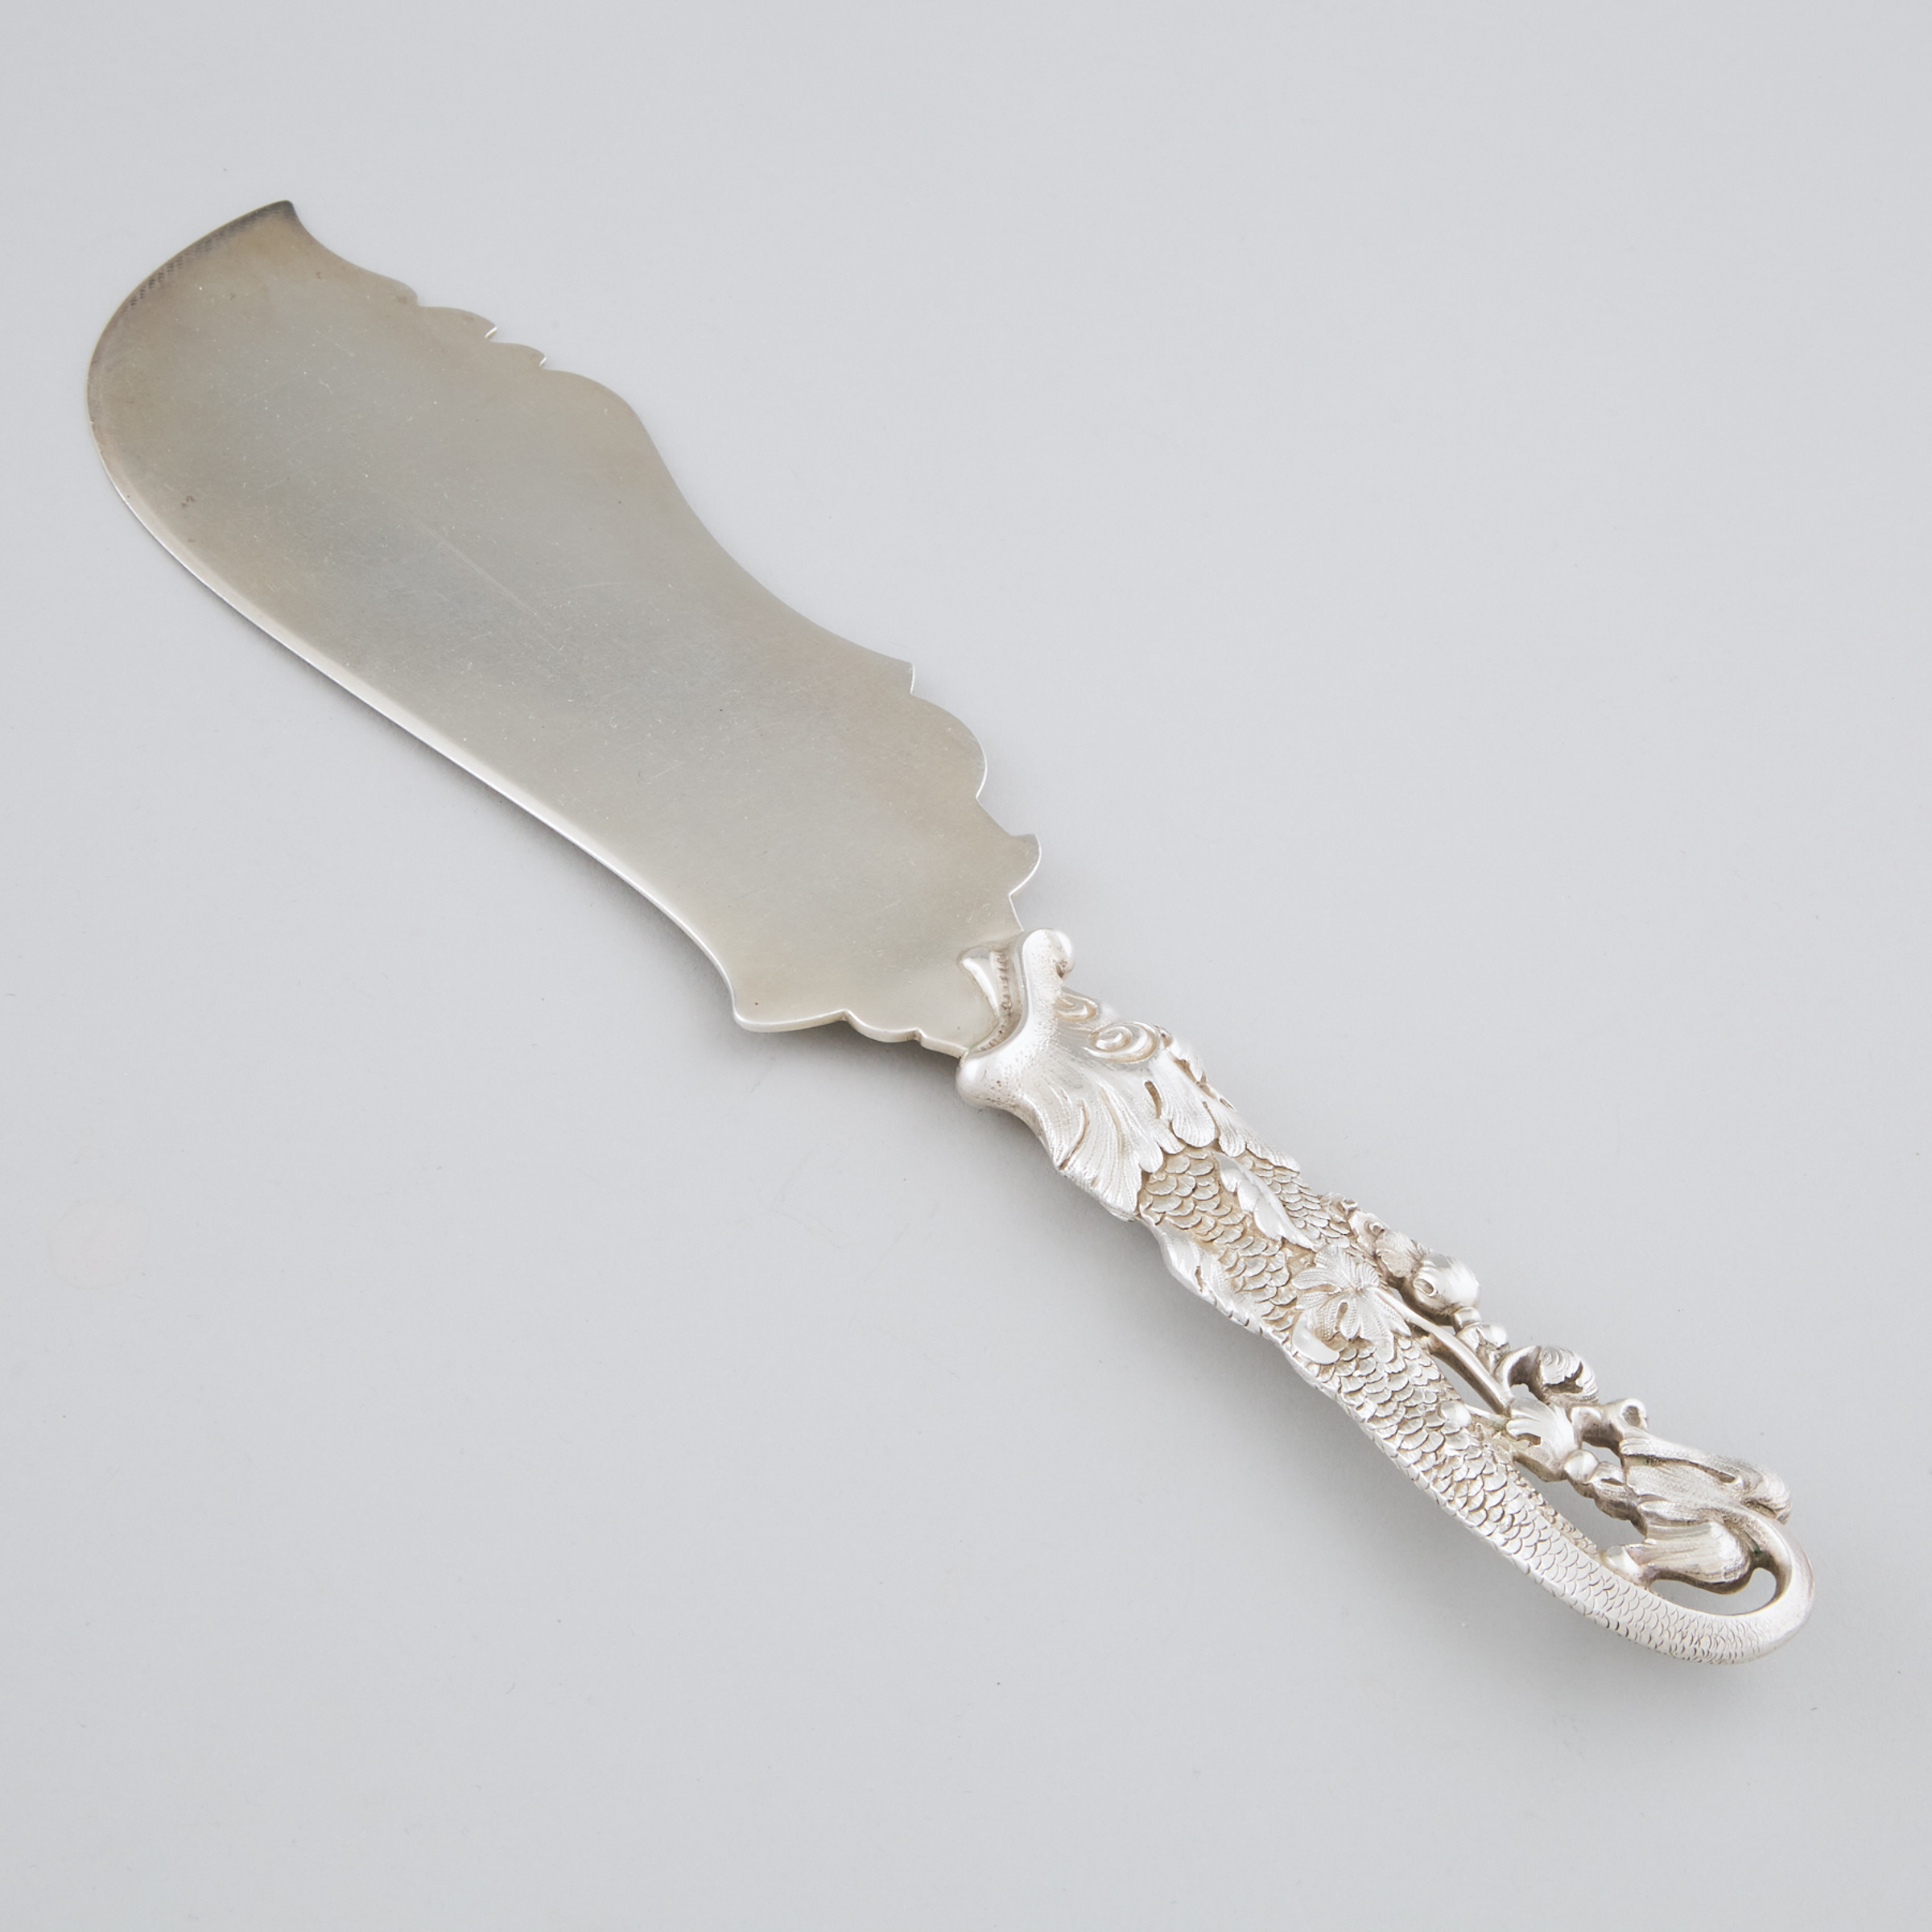 American Silver Fish Knife, George W. Shiebler & Co., New York, N.Y., for Theodore B. Starr, c.1900